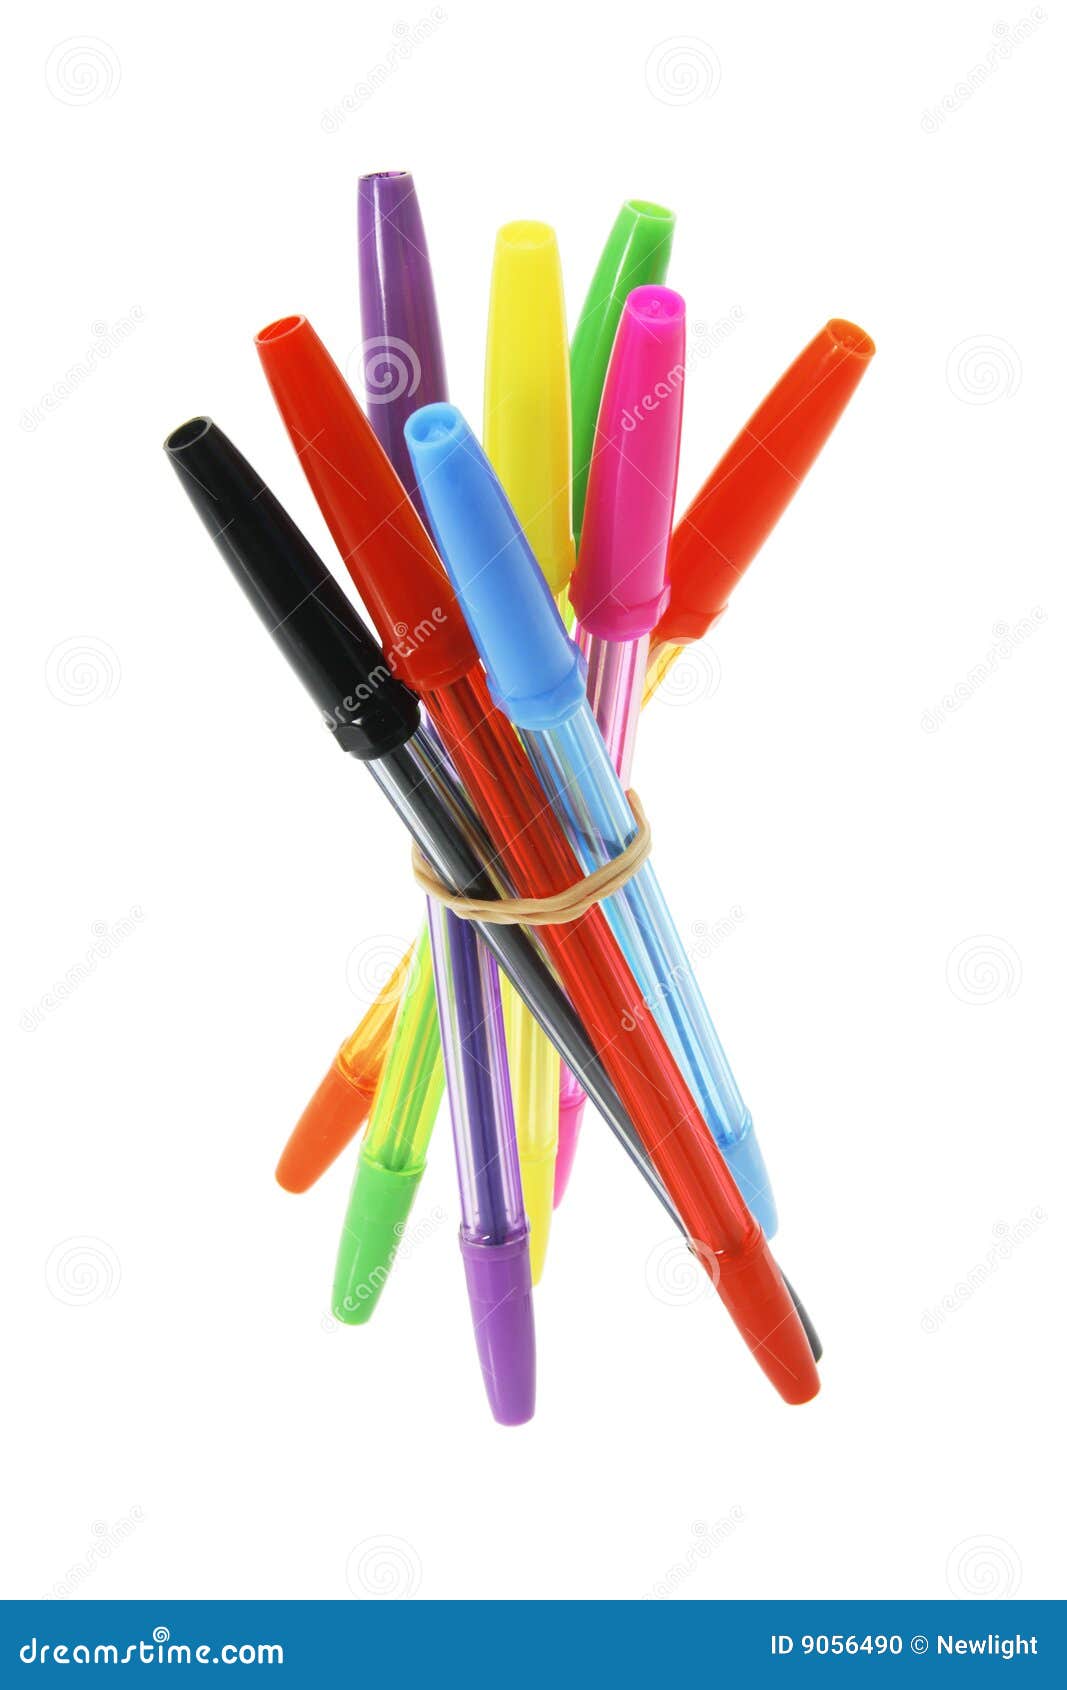 bundle of ballpoint pens